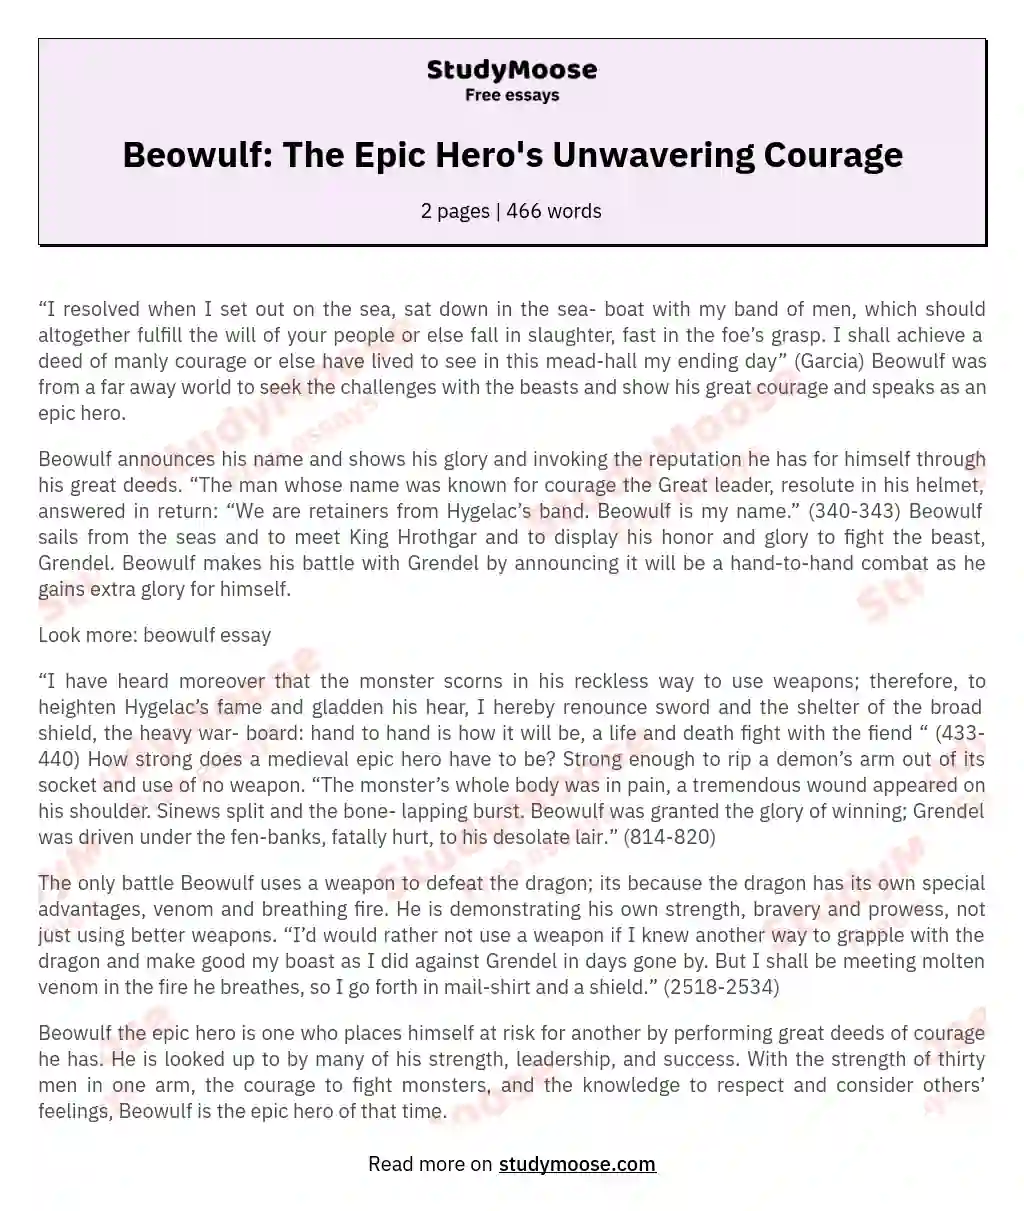 Beowulf: The Epic Hero's Unwavering Courage essay